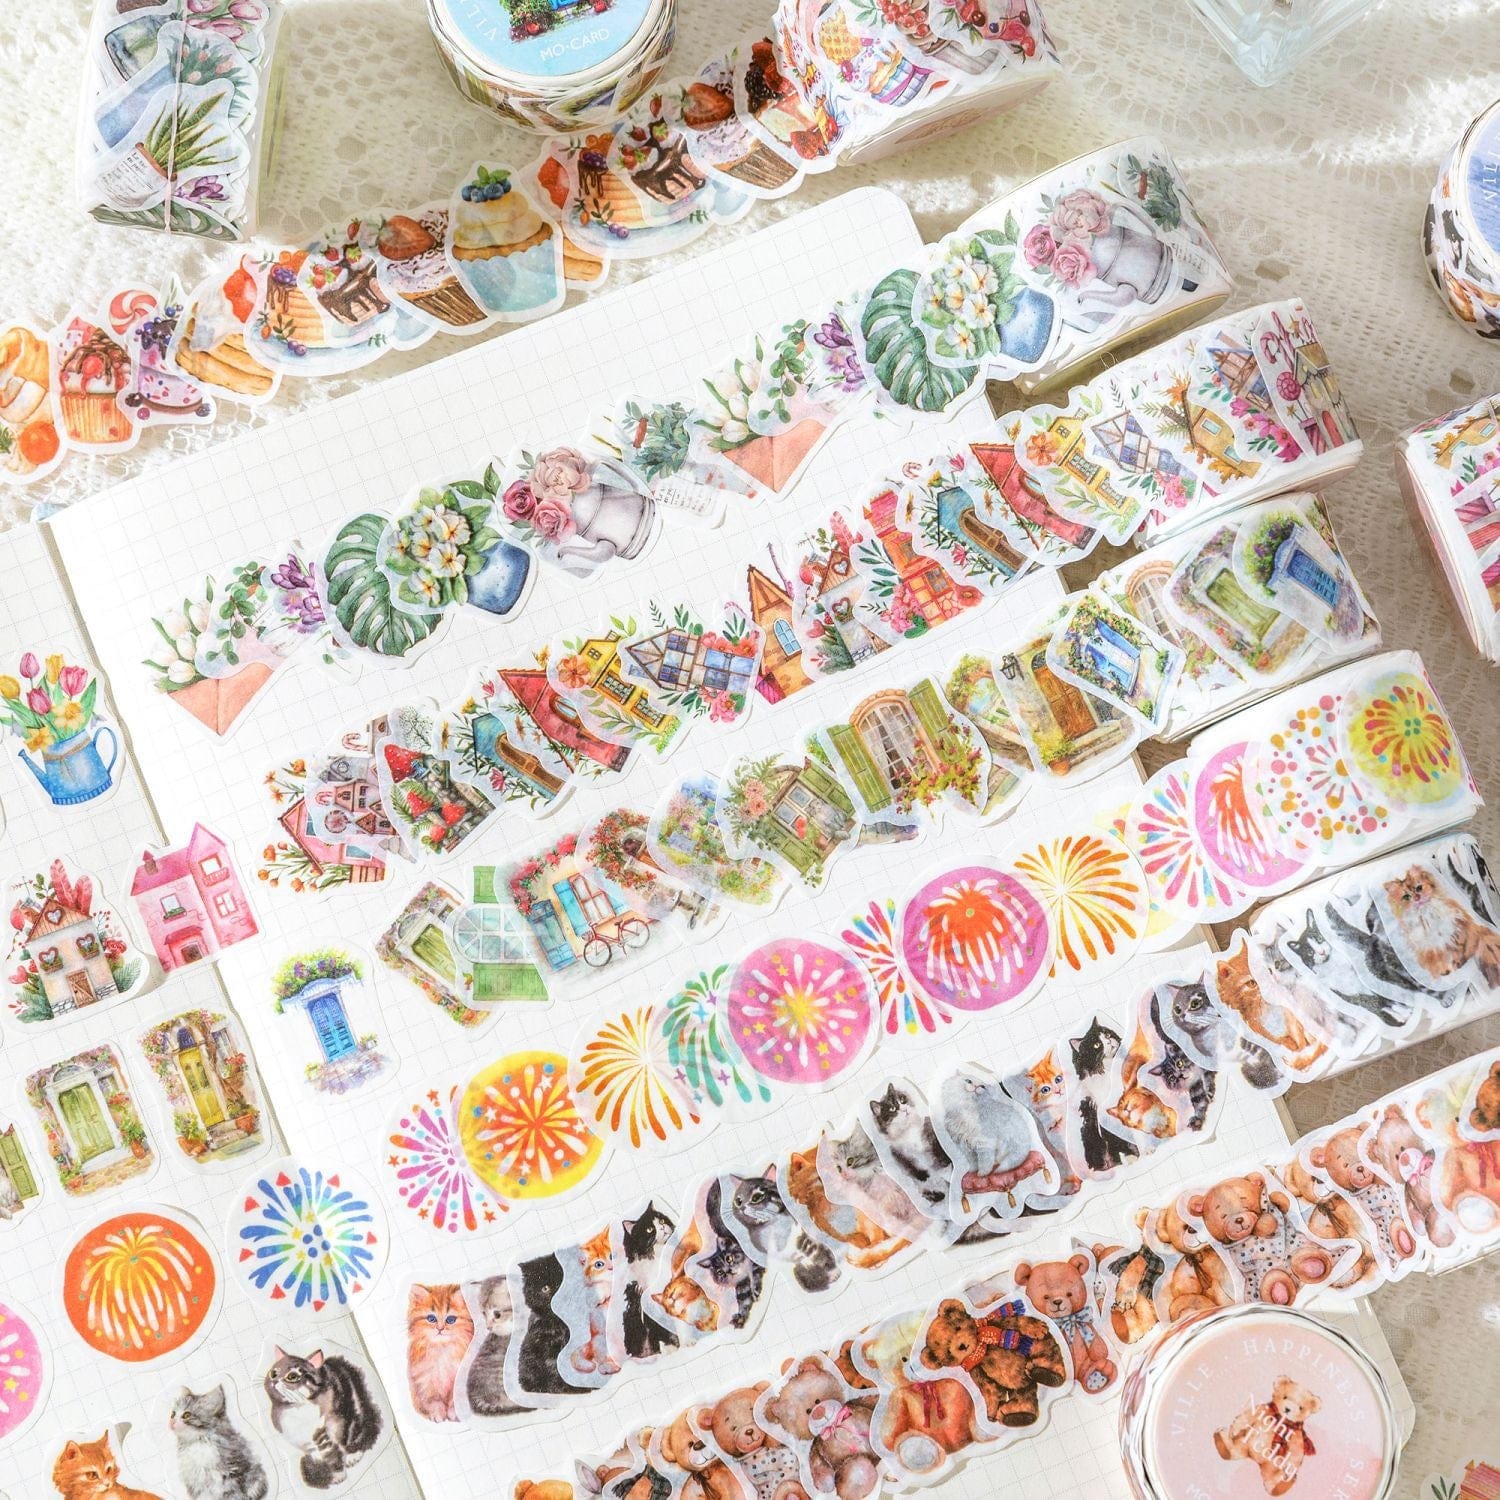 KUMA Stationery & Crafts  100pcs Everyday Washi Tape Stickers